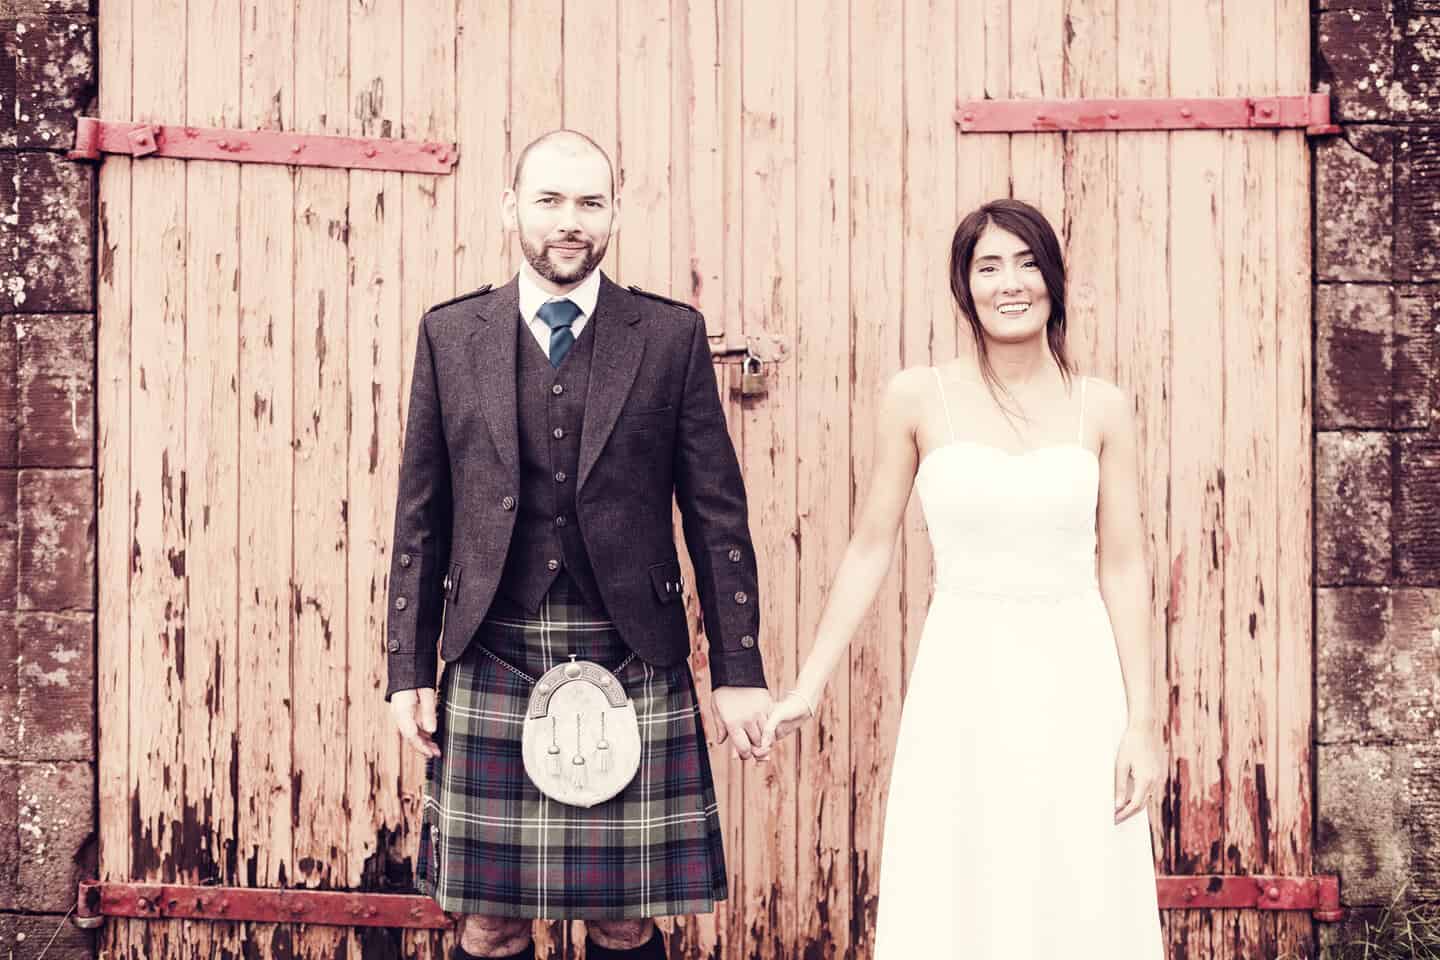 Edinburgh Wedding Photography Packages by Ewan Mathers Photographer